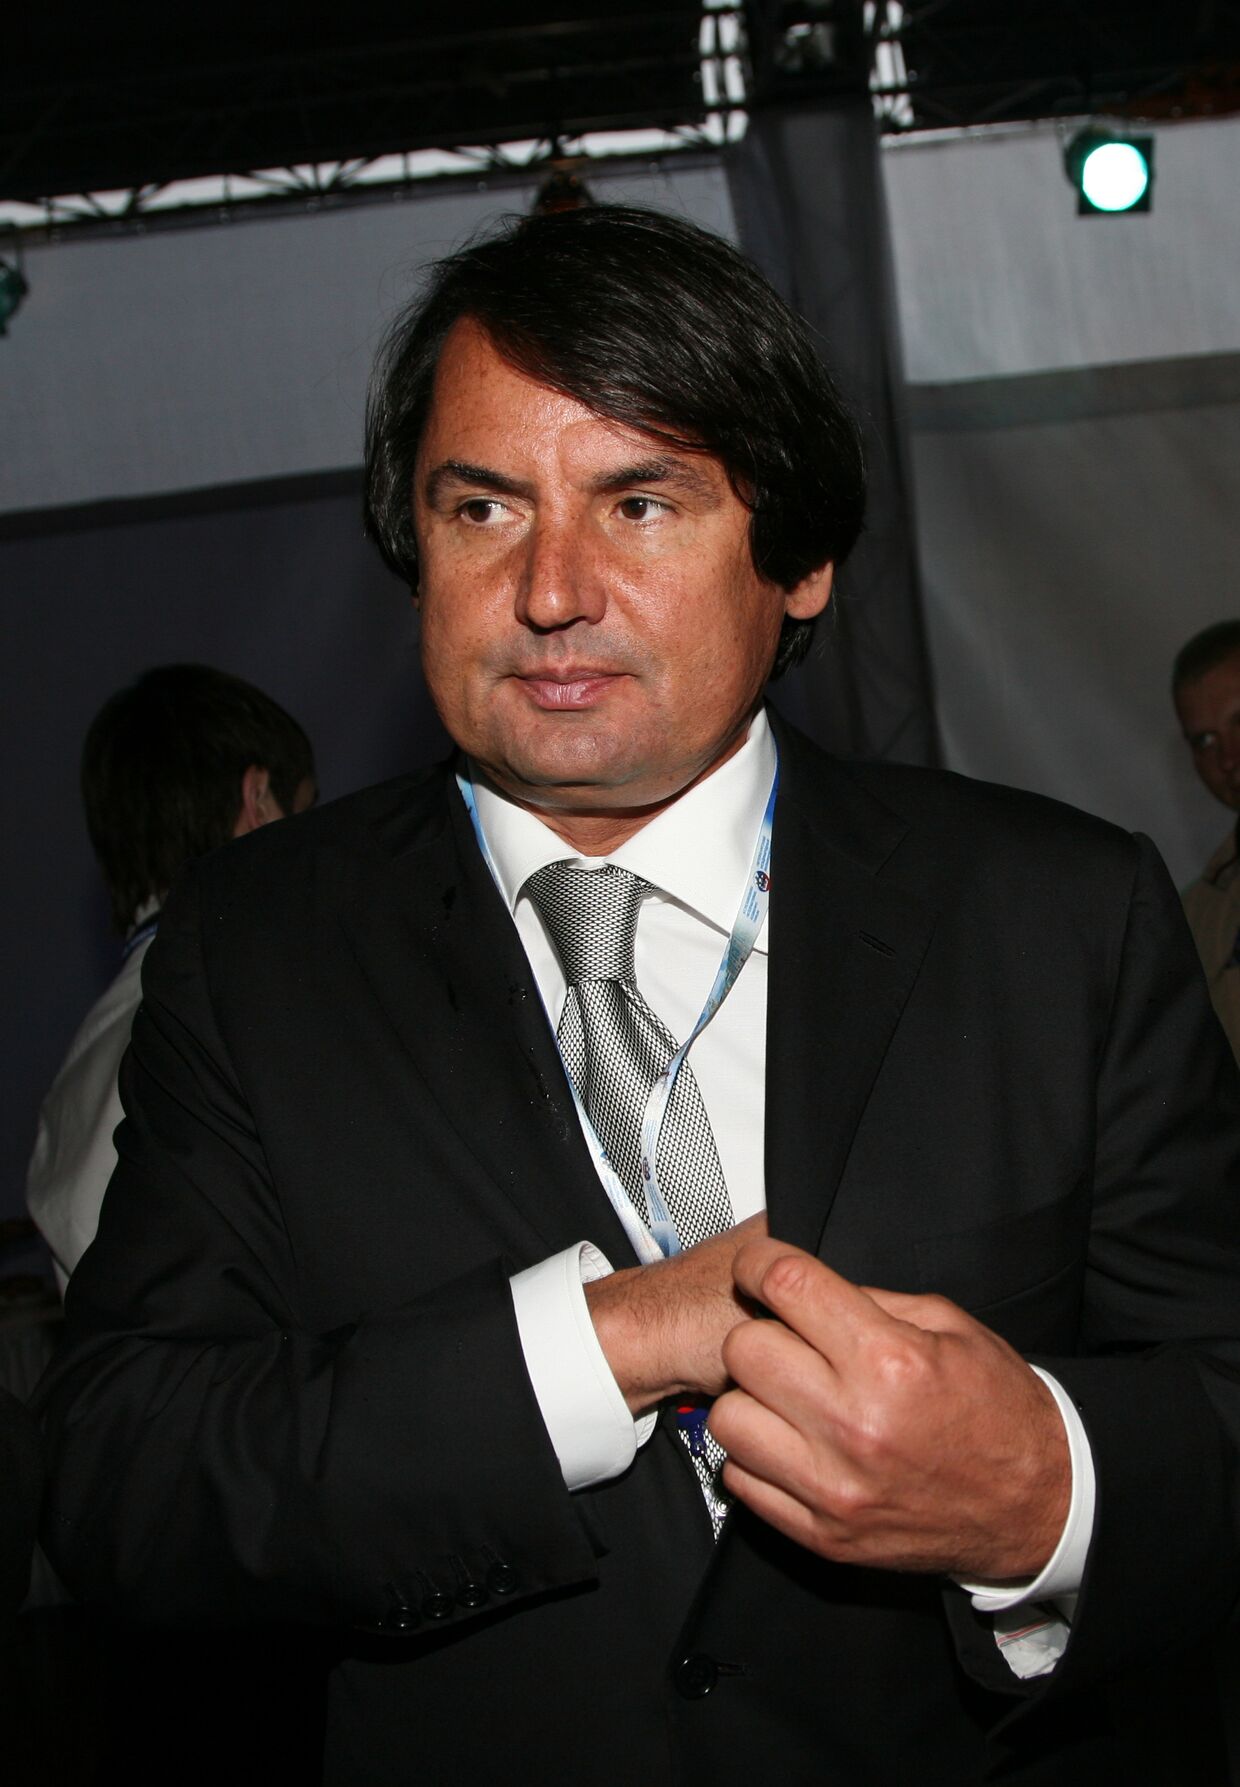 Рустам Тарико, владелец компании Русский стандарт